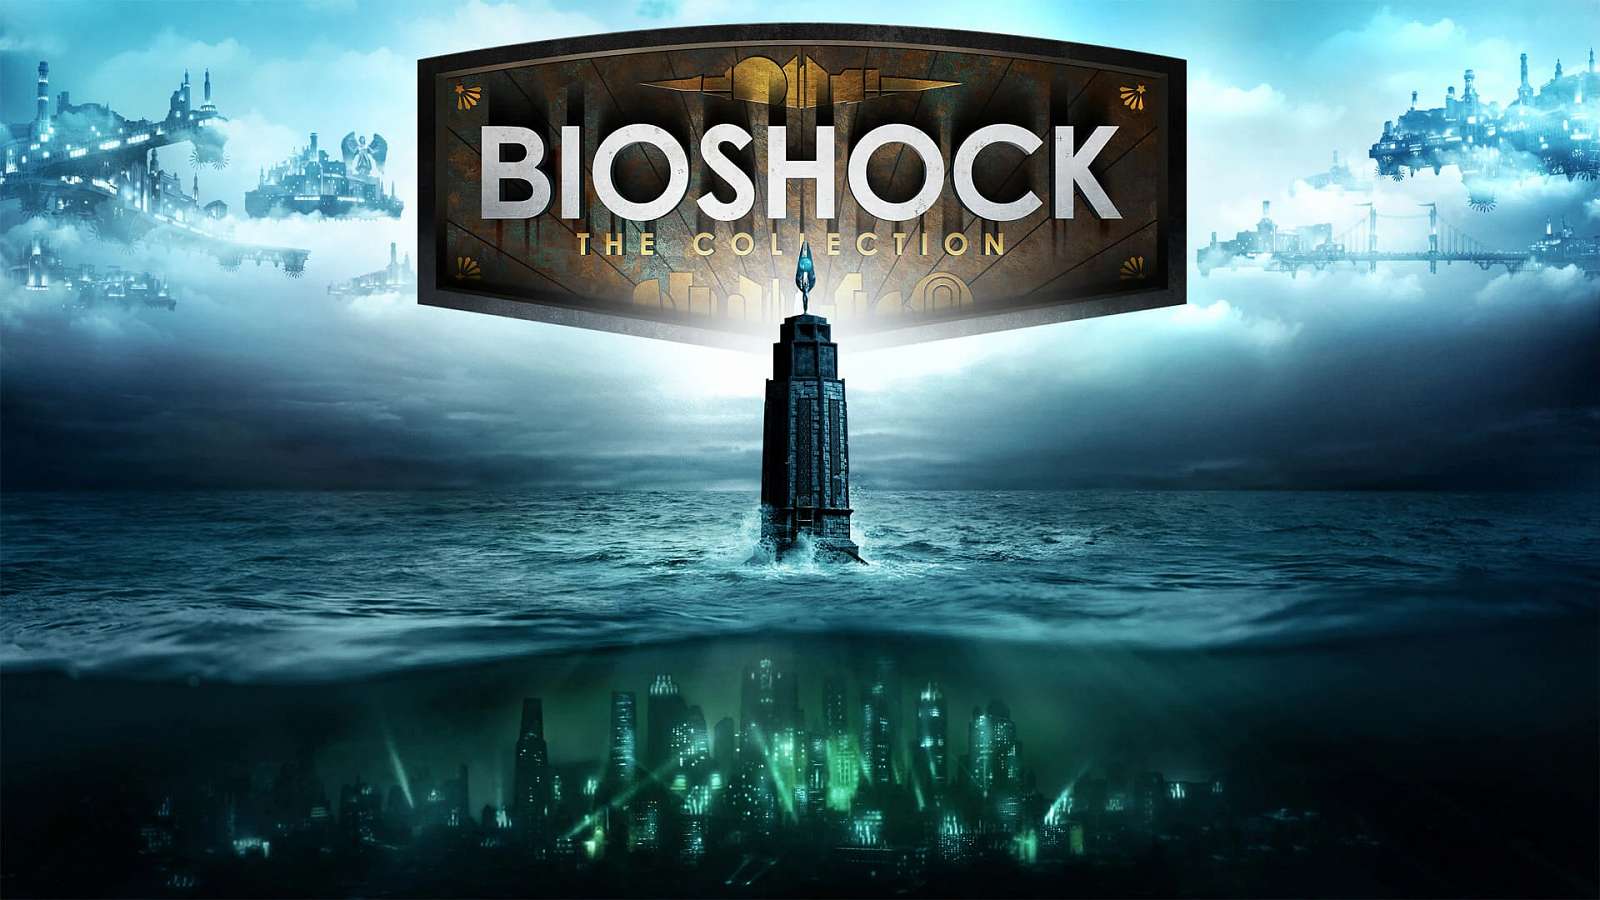 Stahujte zdarma kompletní edici her Bioshock